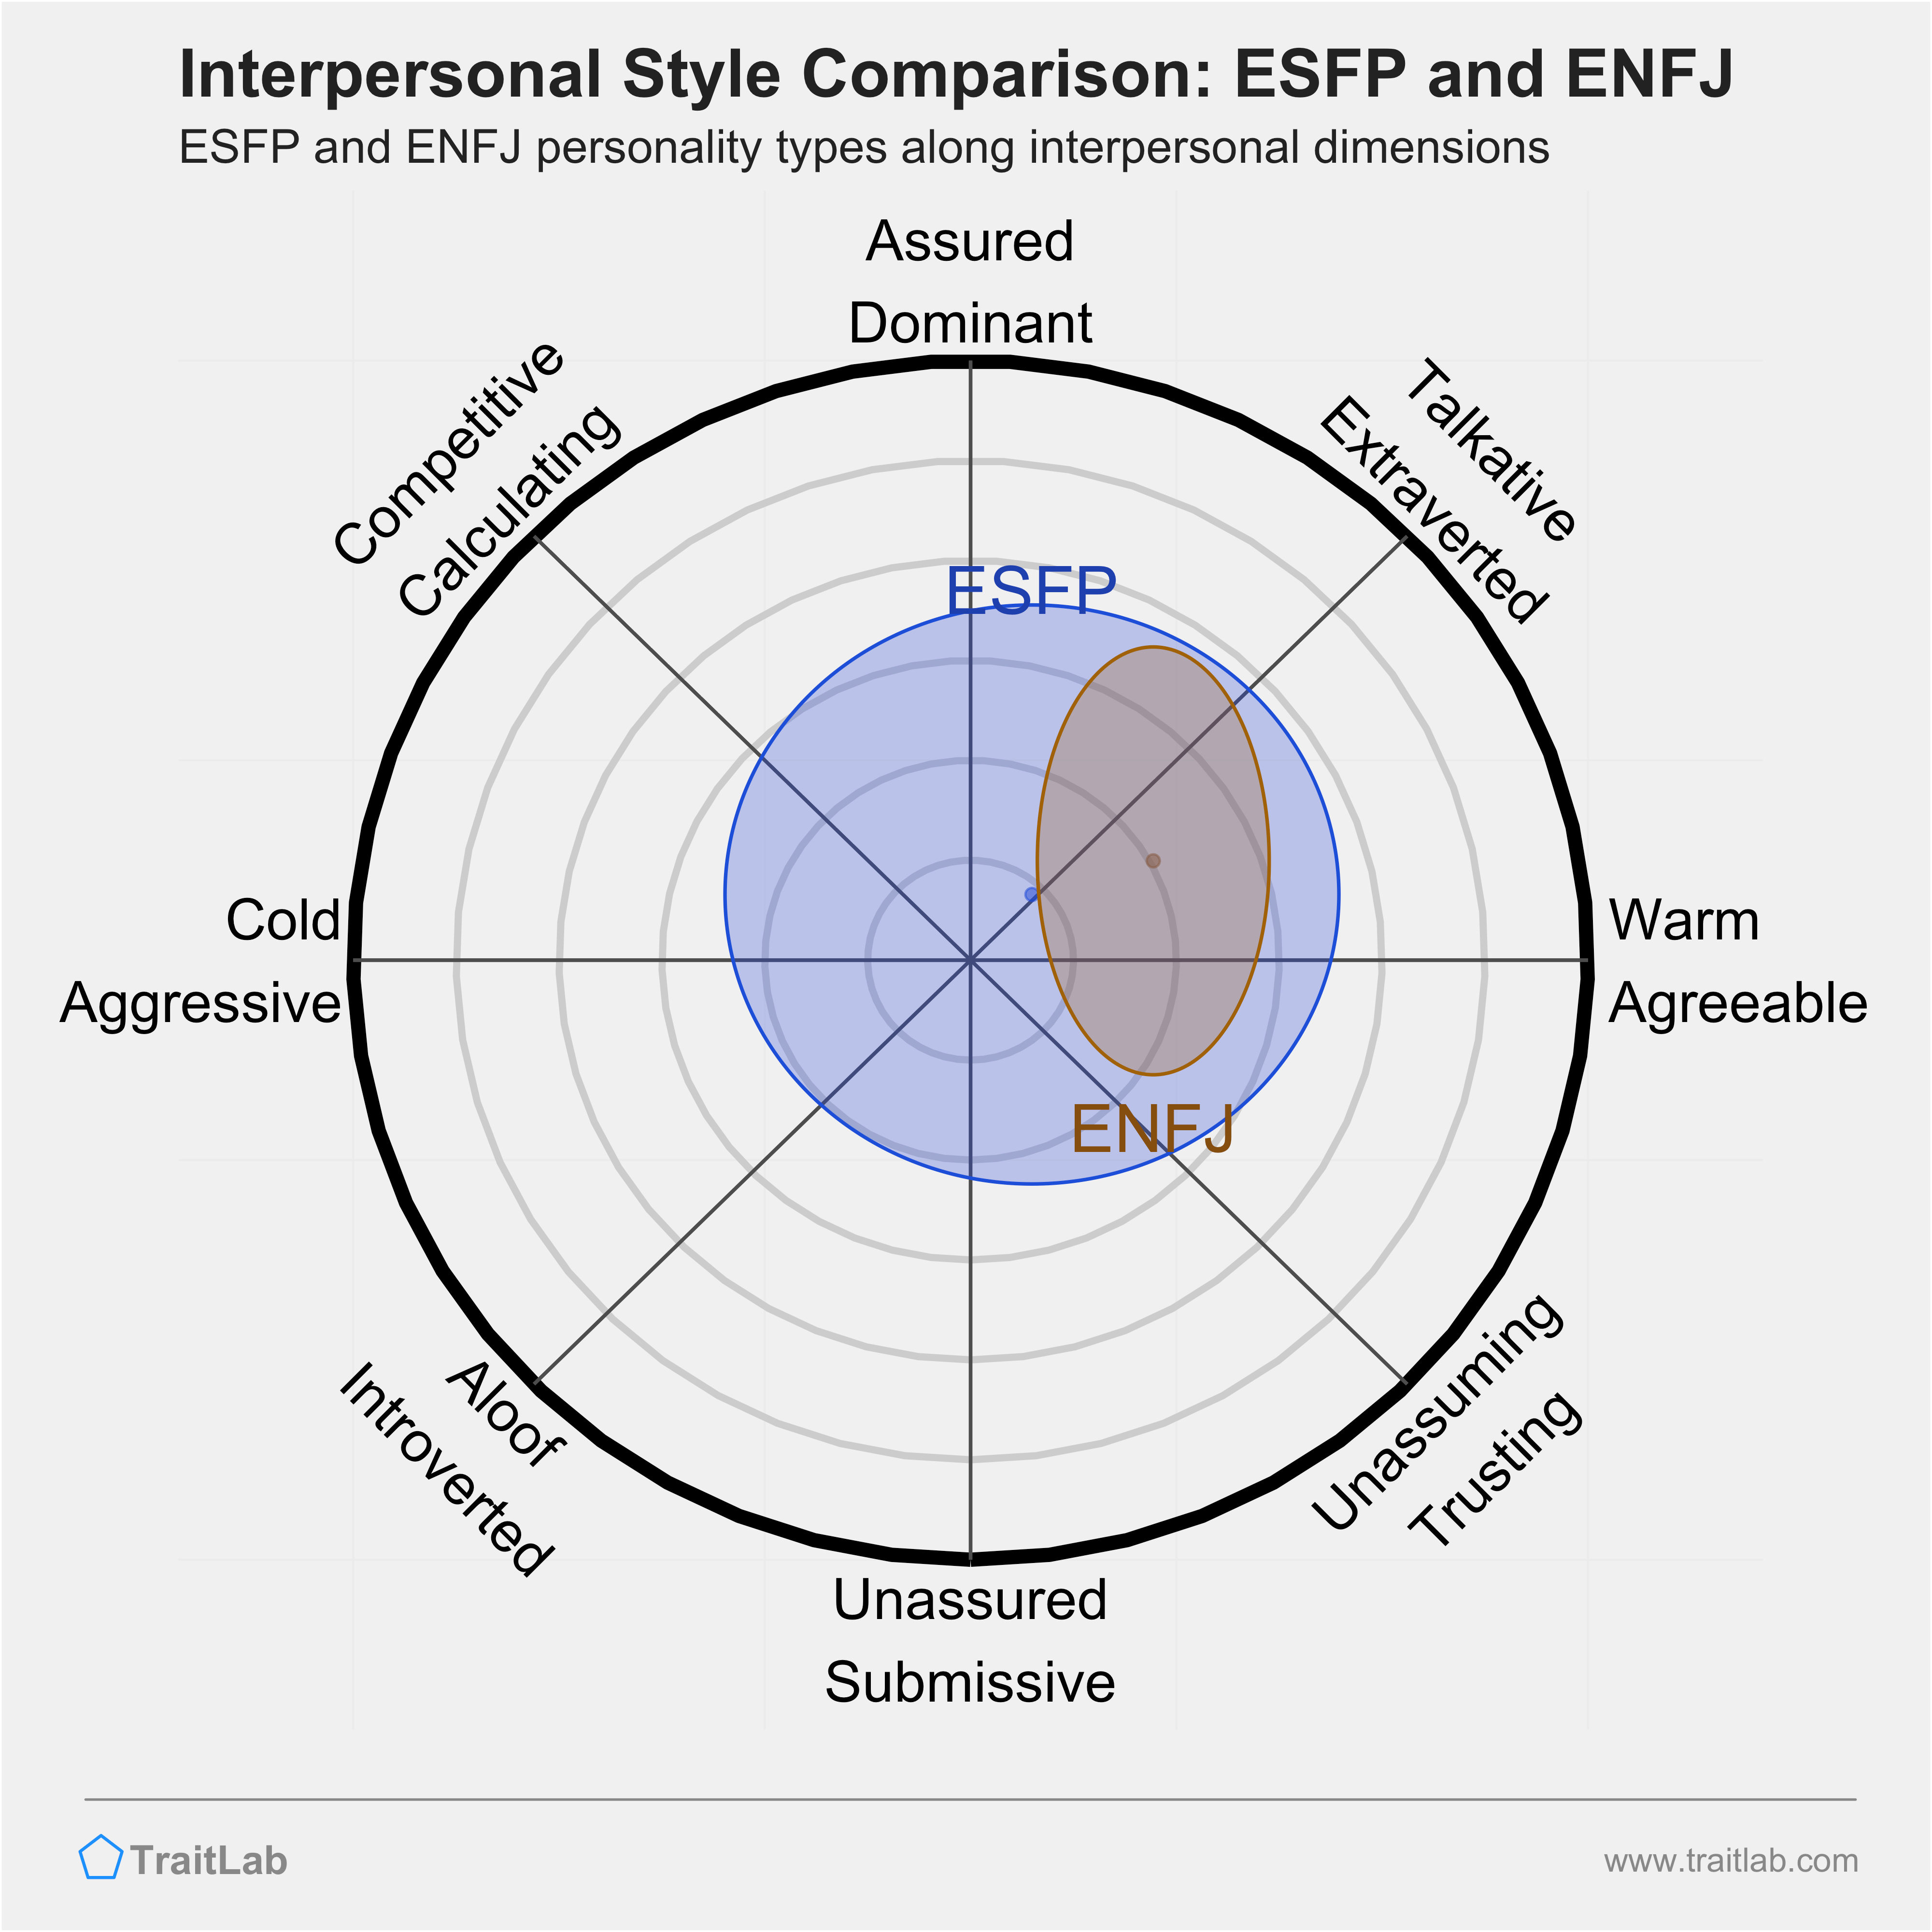 ESFP and ENFJ comparison across interpersonal dimensions